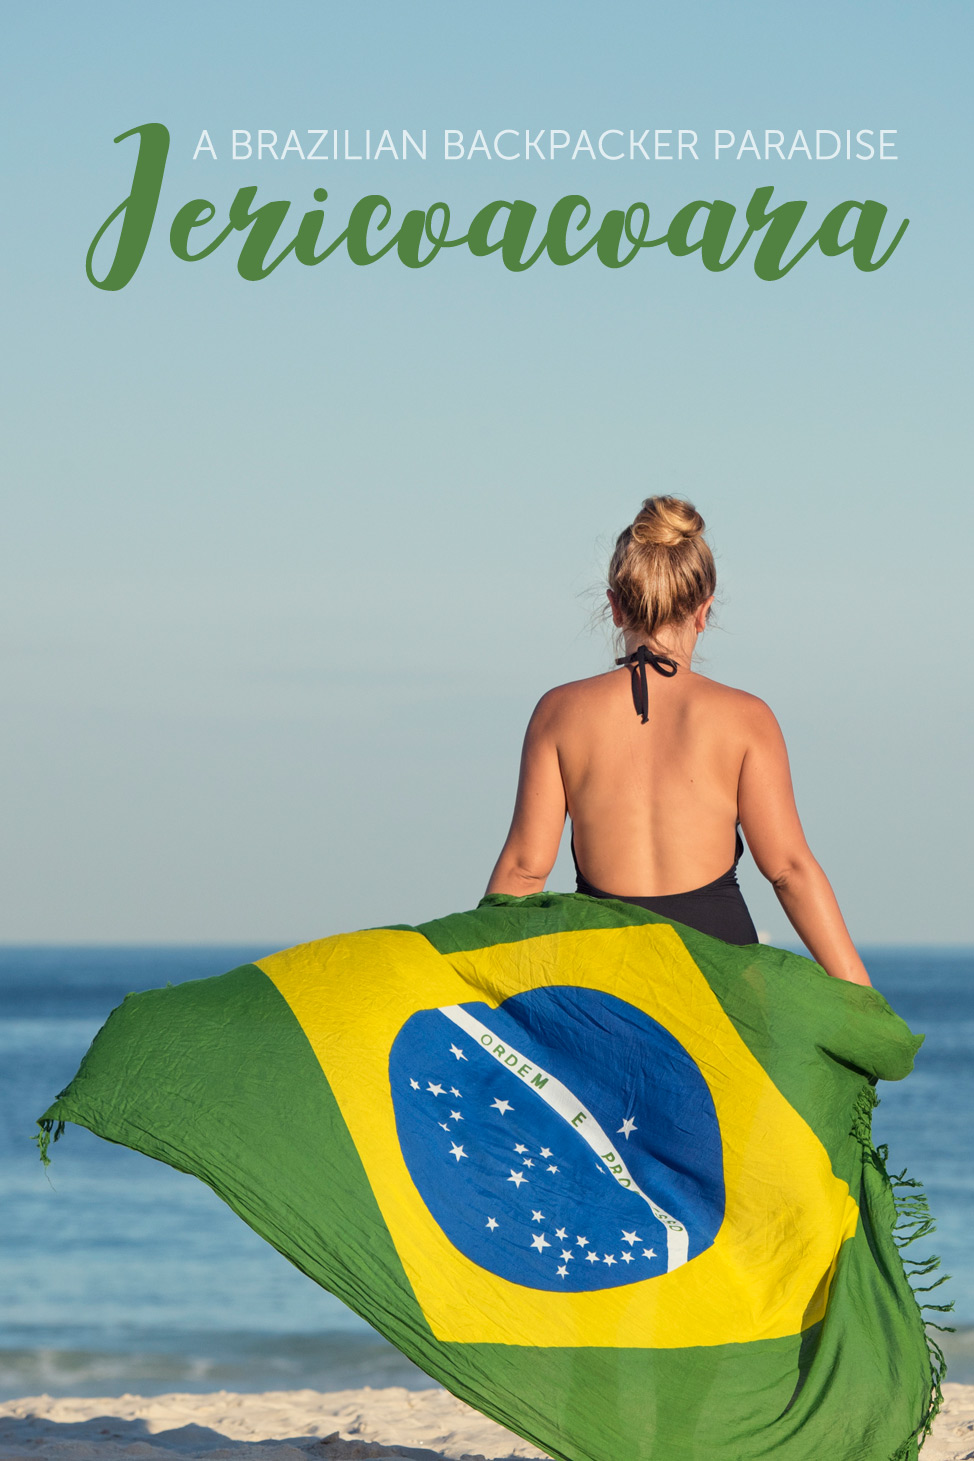 Jericoacoara • A Backpacker's Paradise in Brazil